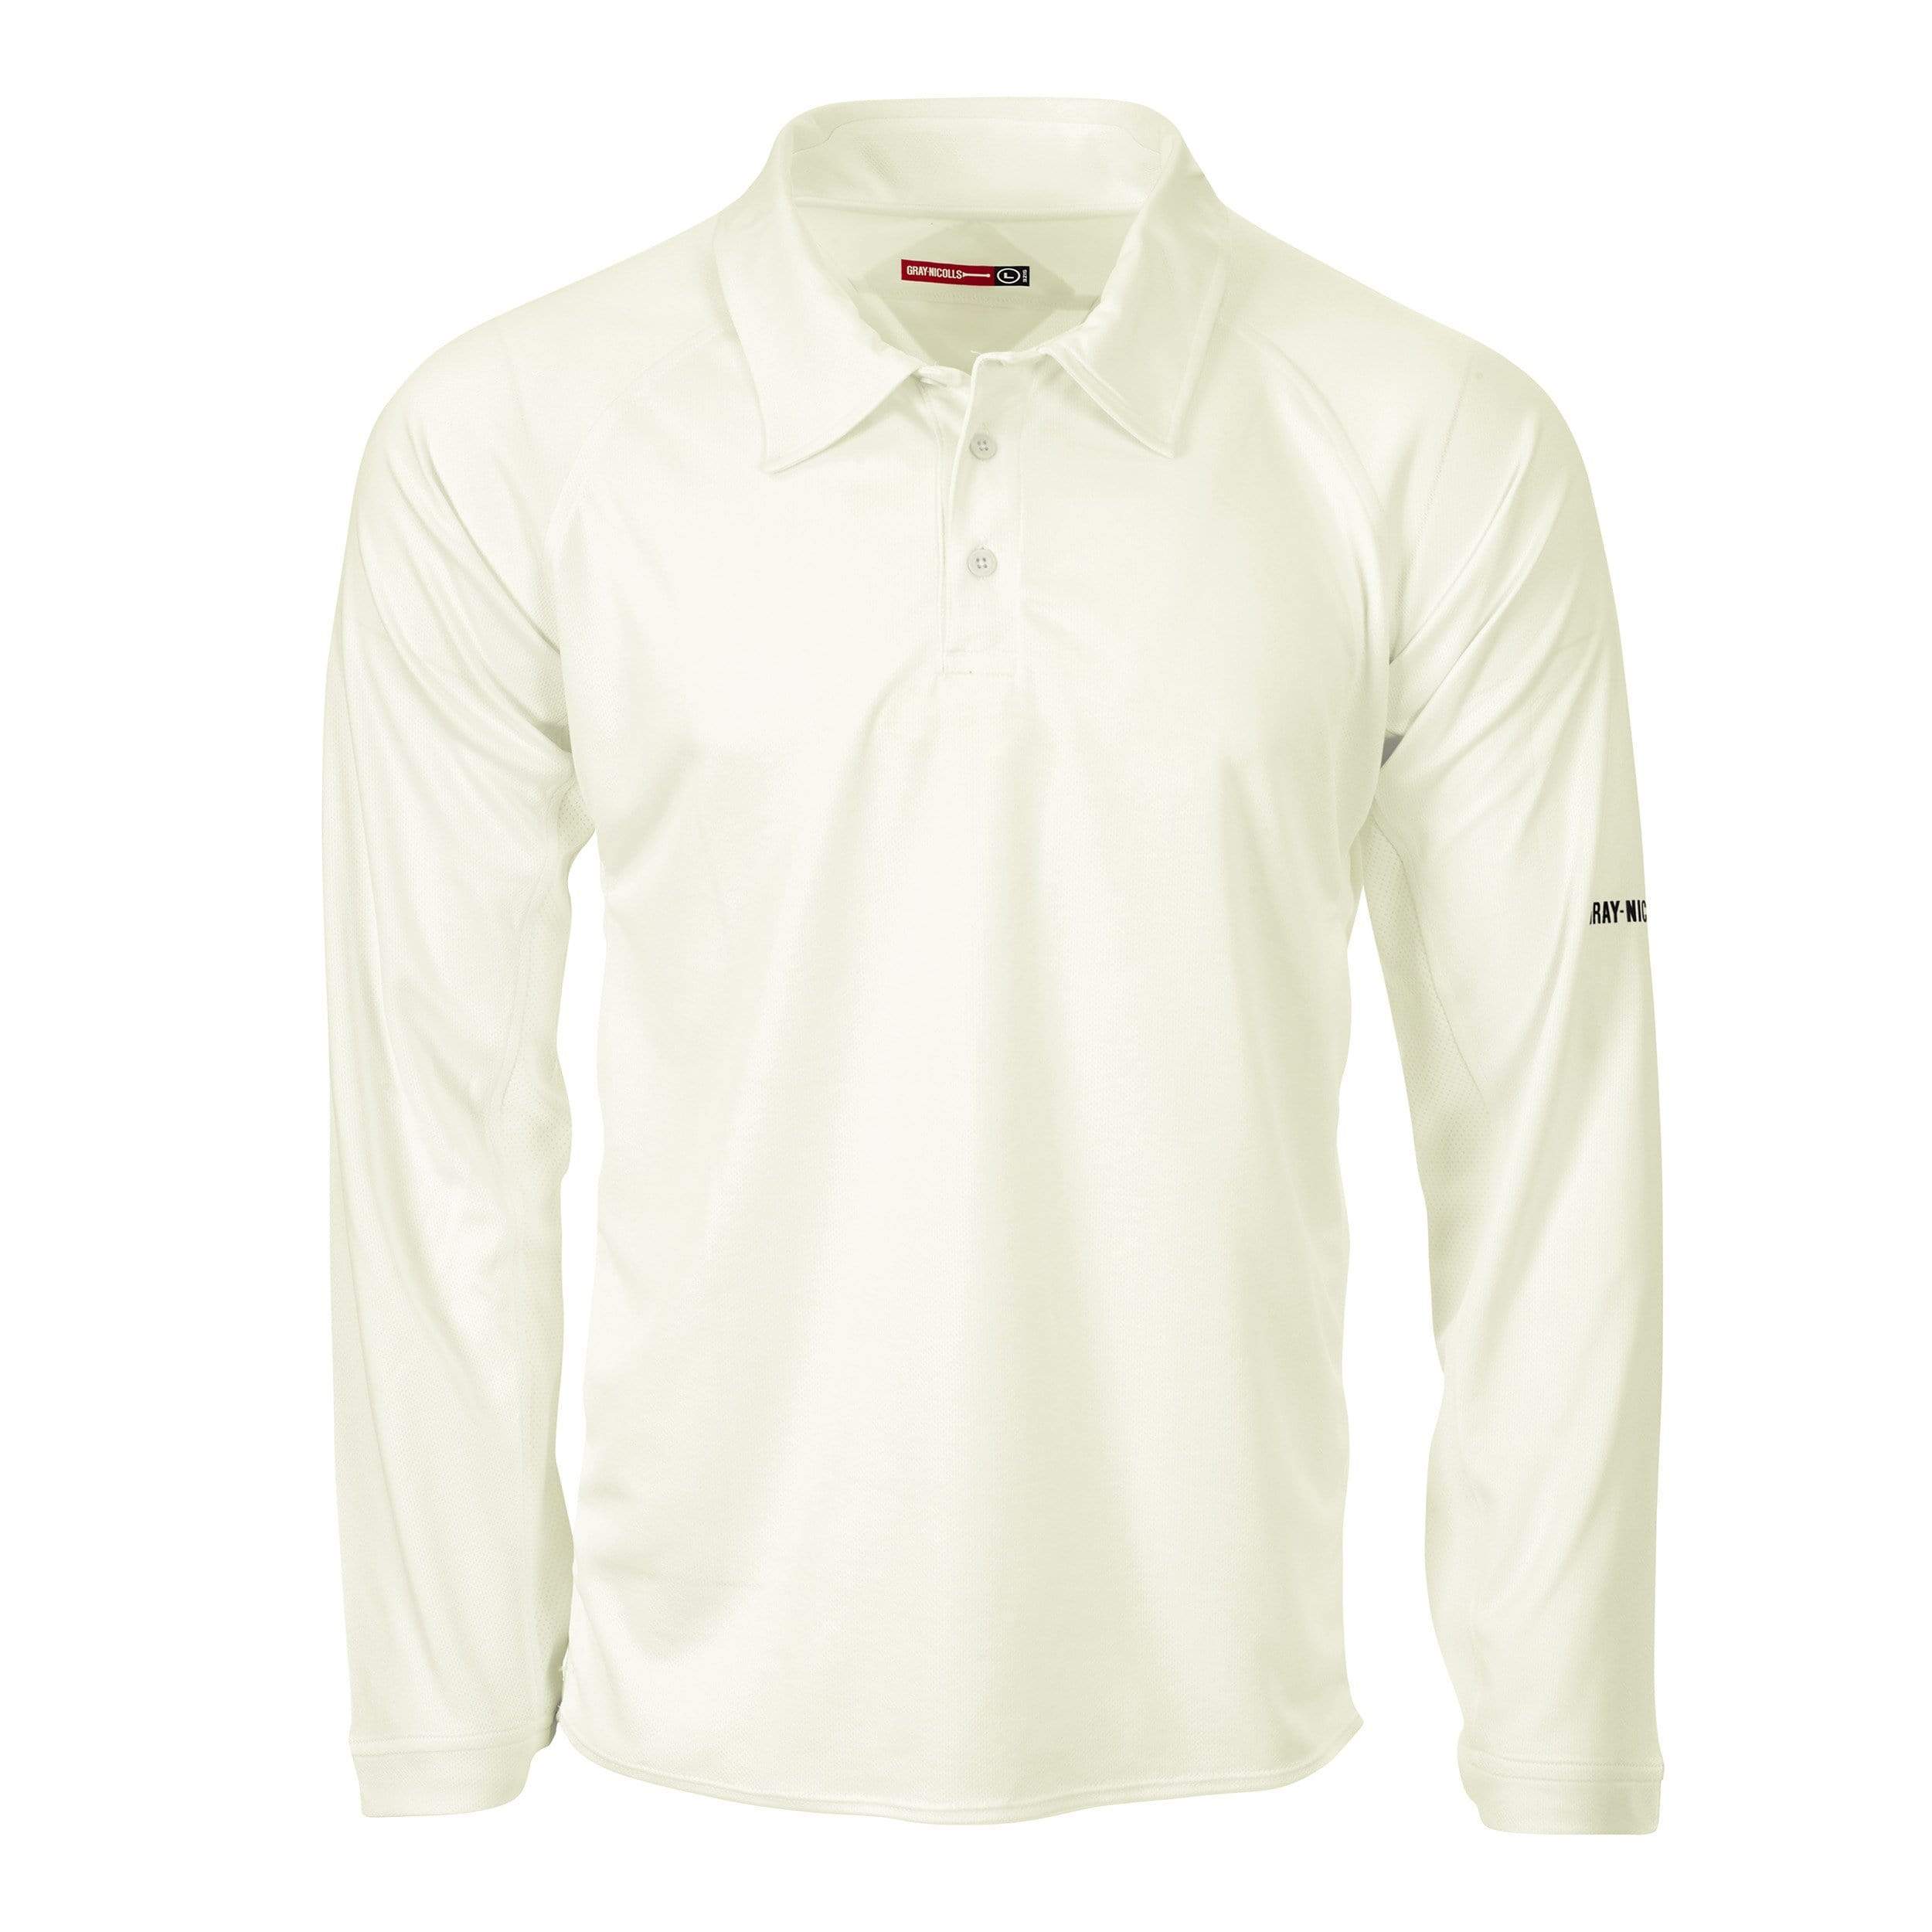 Gray Nicolls Clothing Gray-Nicolls Players Legend Long Sleeve Cricket Shirt